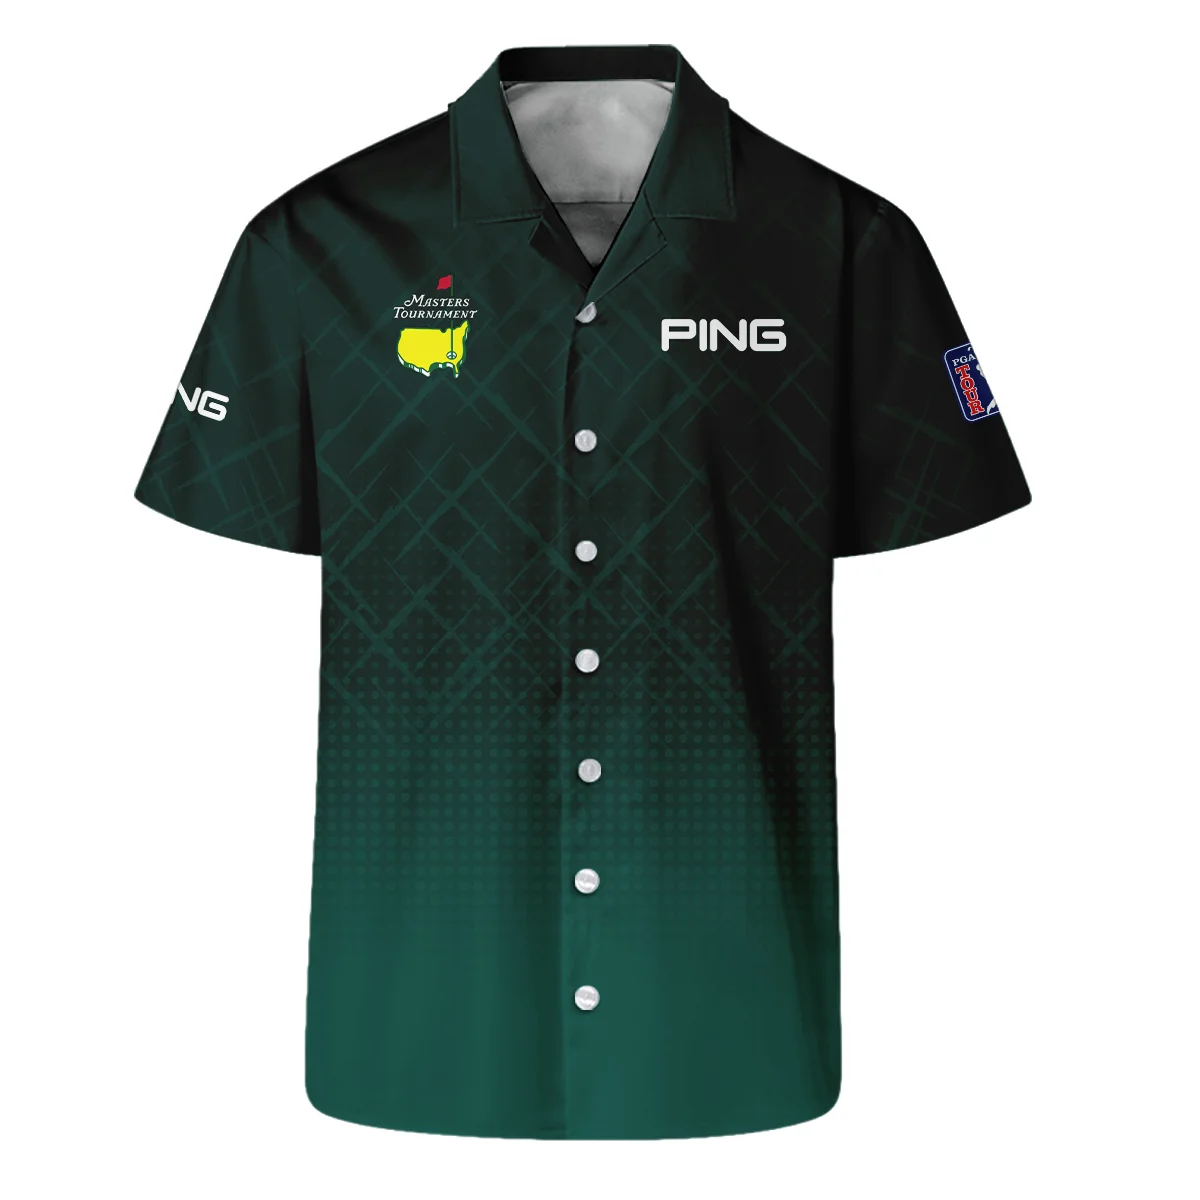 Ping Masters Tournament Sport Jersey Pattern Dark Green Zipper Polo Shirt Style Classic Zipper Polo Shirt For Men